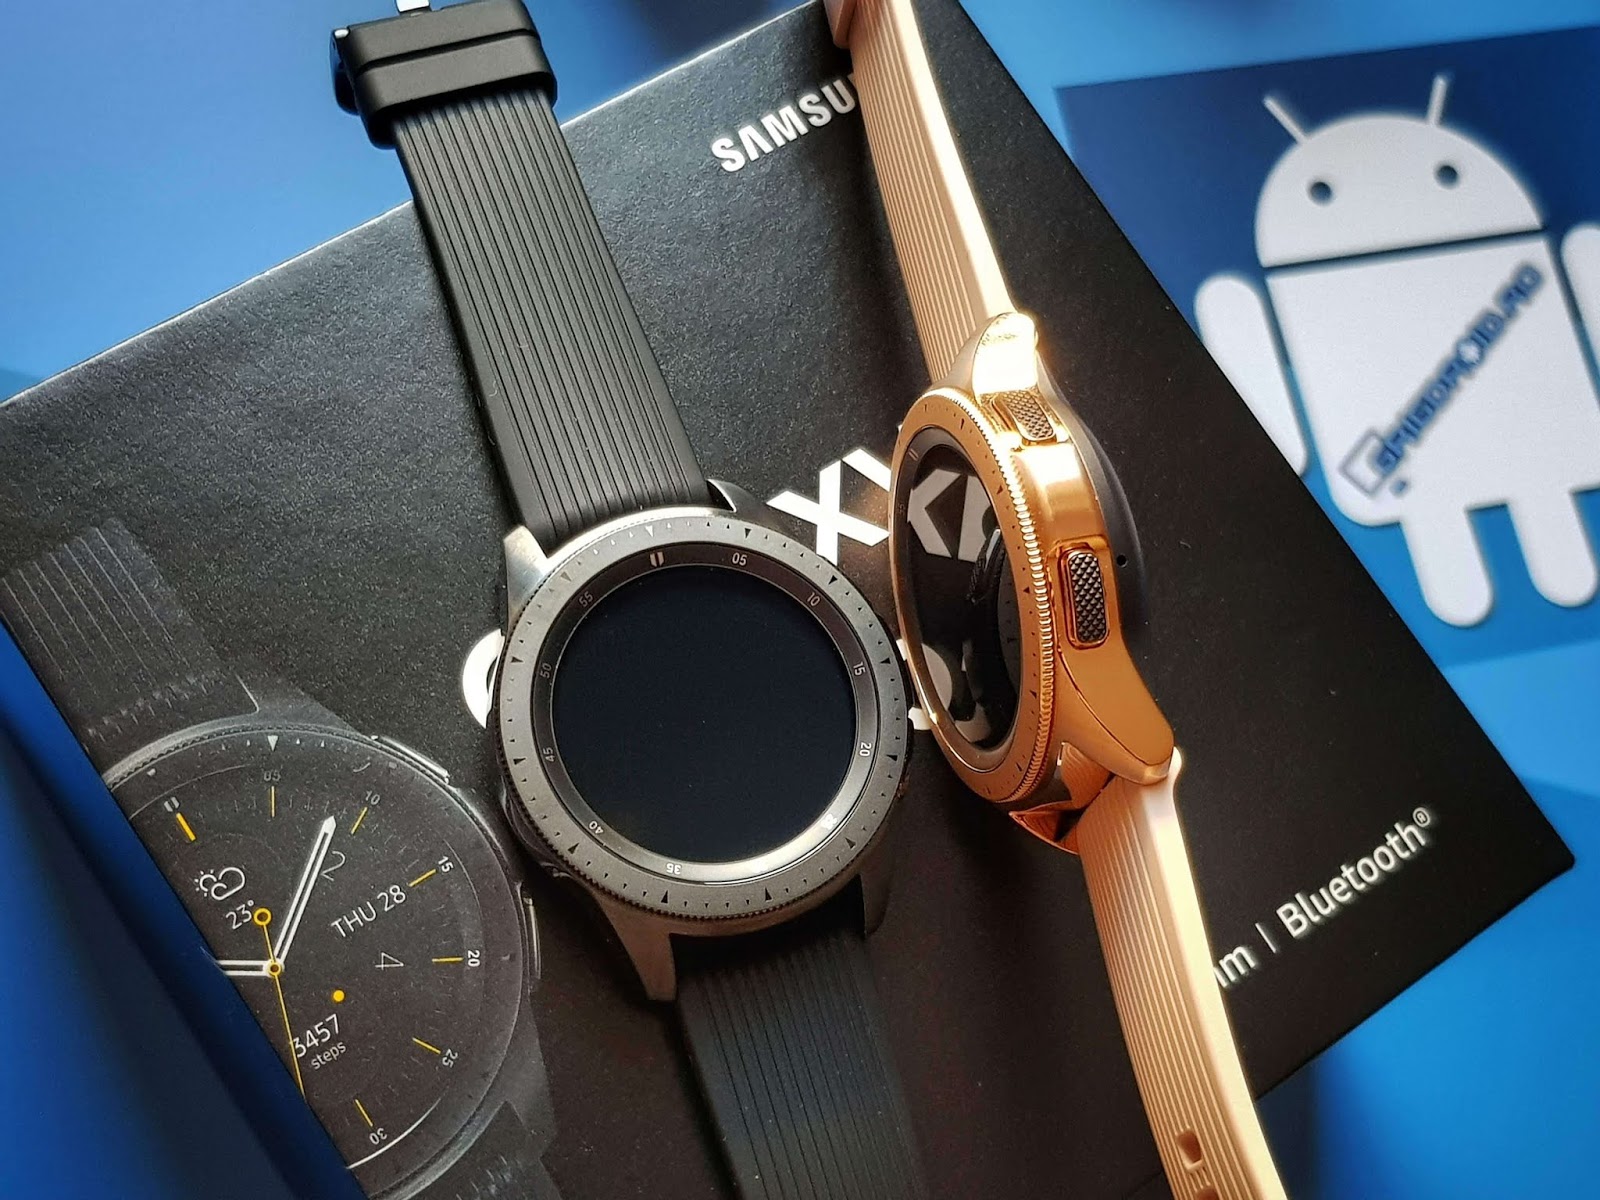 Samsung watch sm r800. Samsung watch 42mm. Galaxy watch 42mm. Самсунг часы галакси watch 42mm. Samsung Galaxy watch SM-r800.